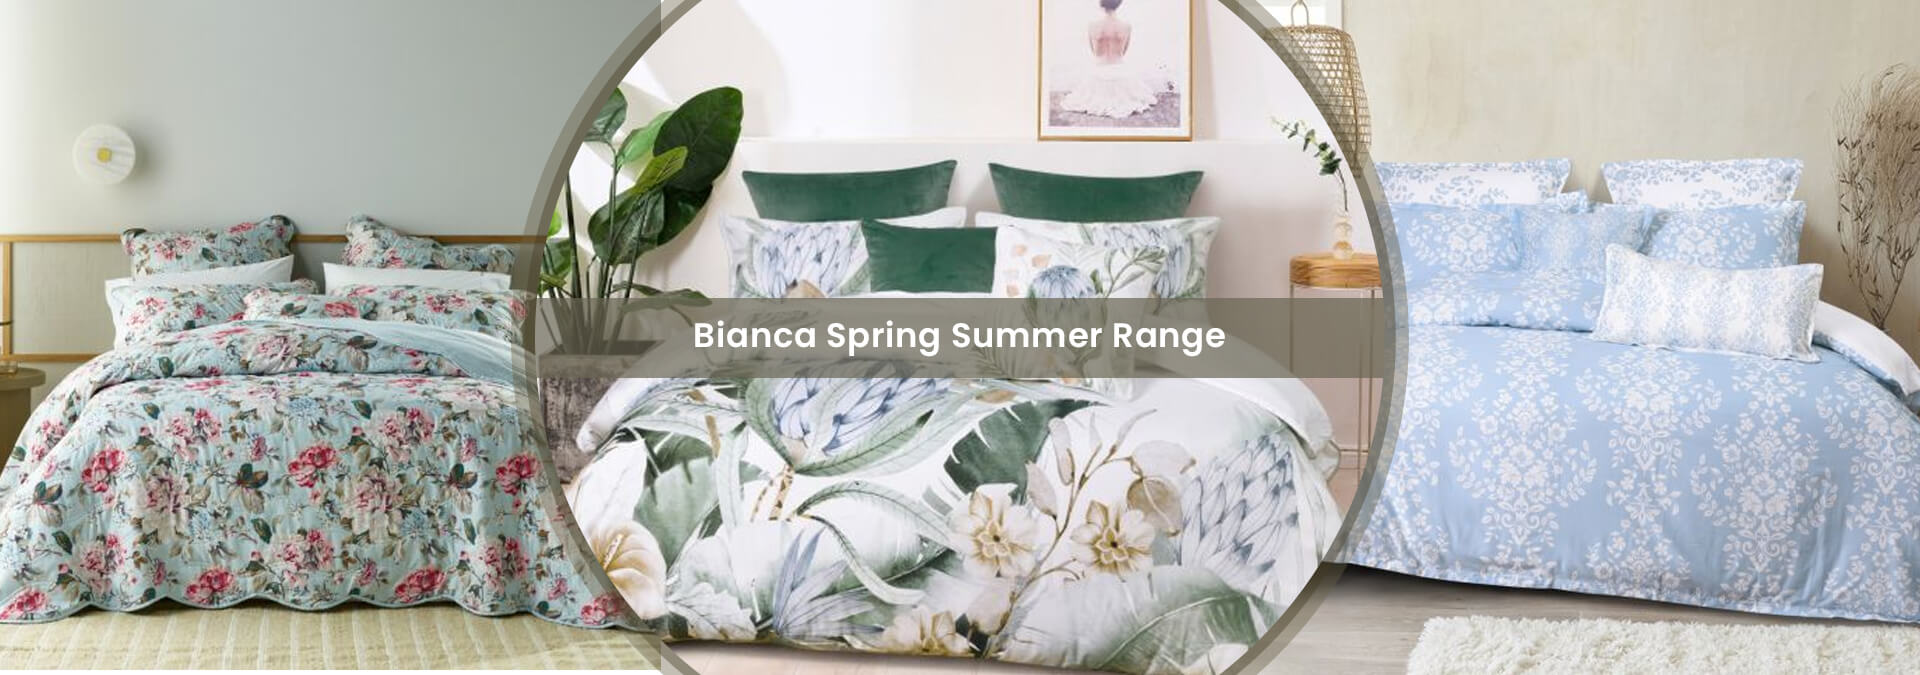 Bianca Spring Summer Range